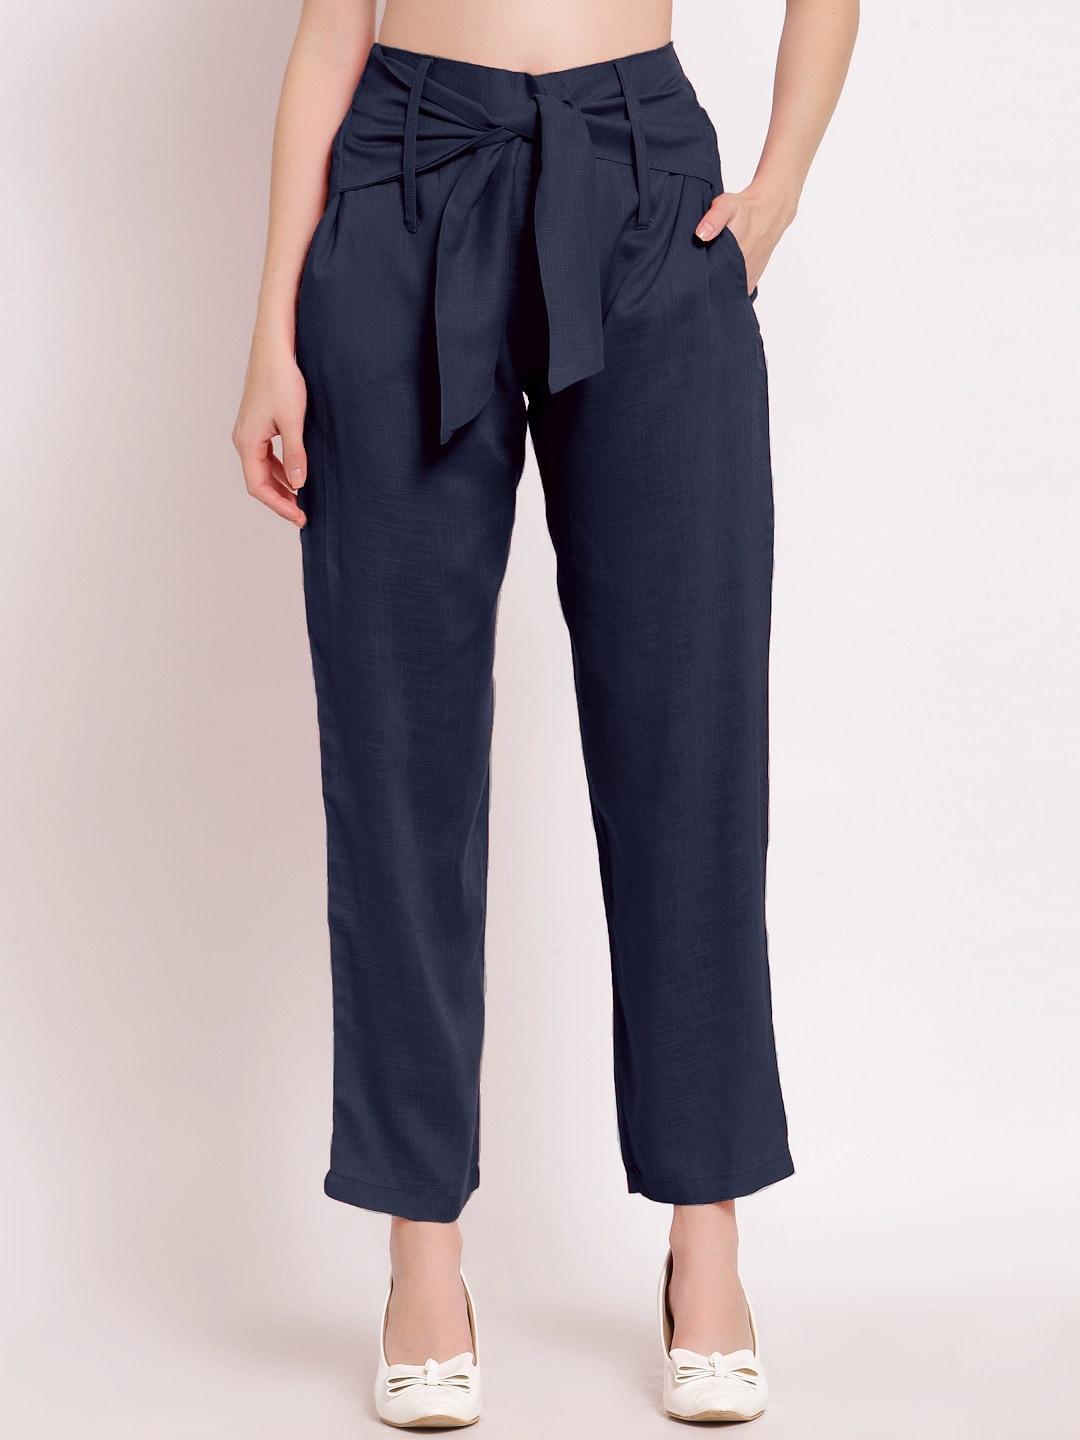 patrorna-women-smart-fit-peg-trousers